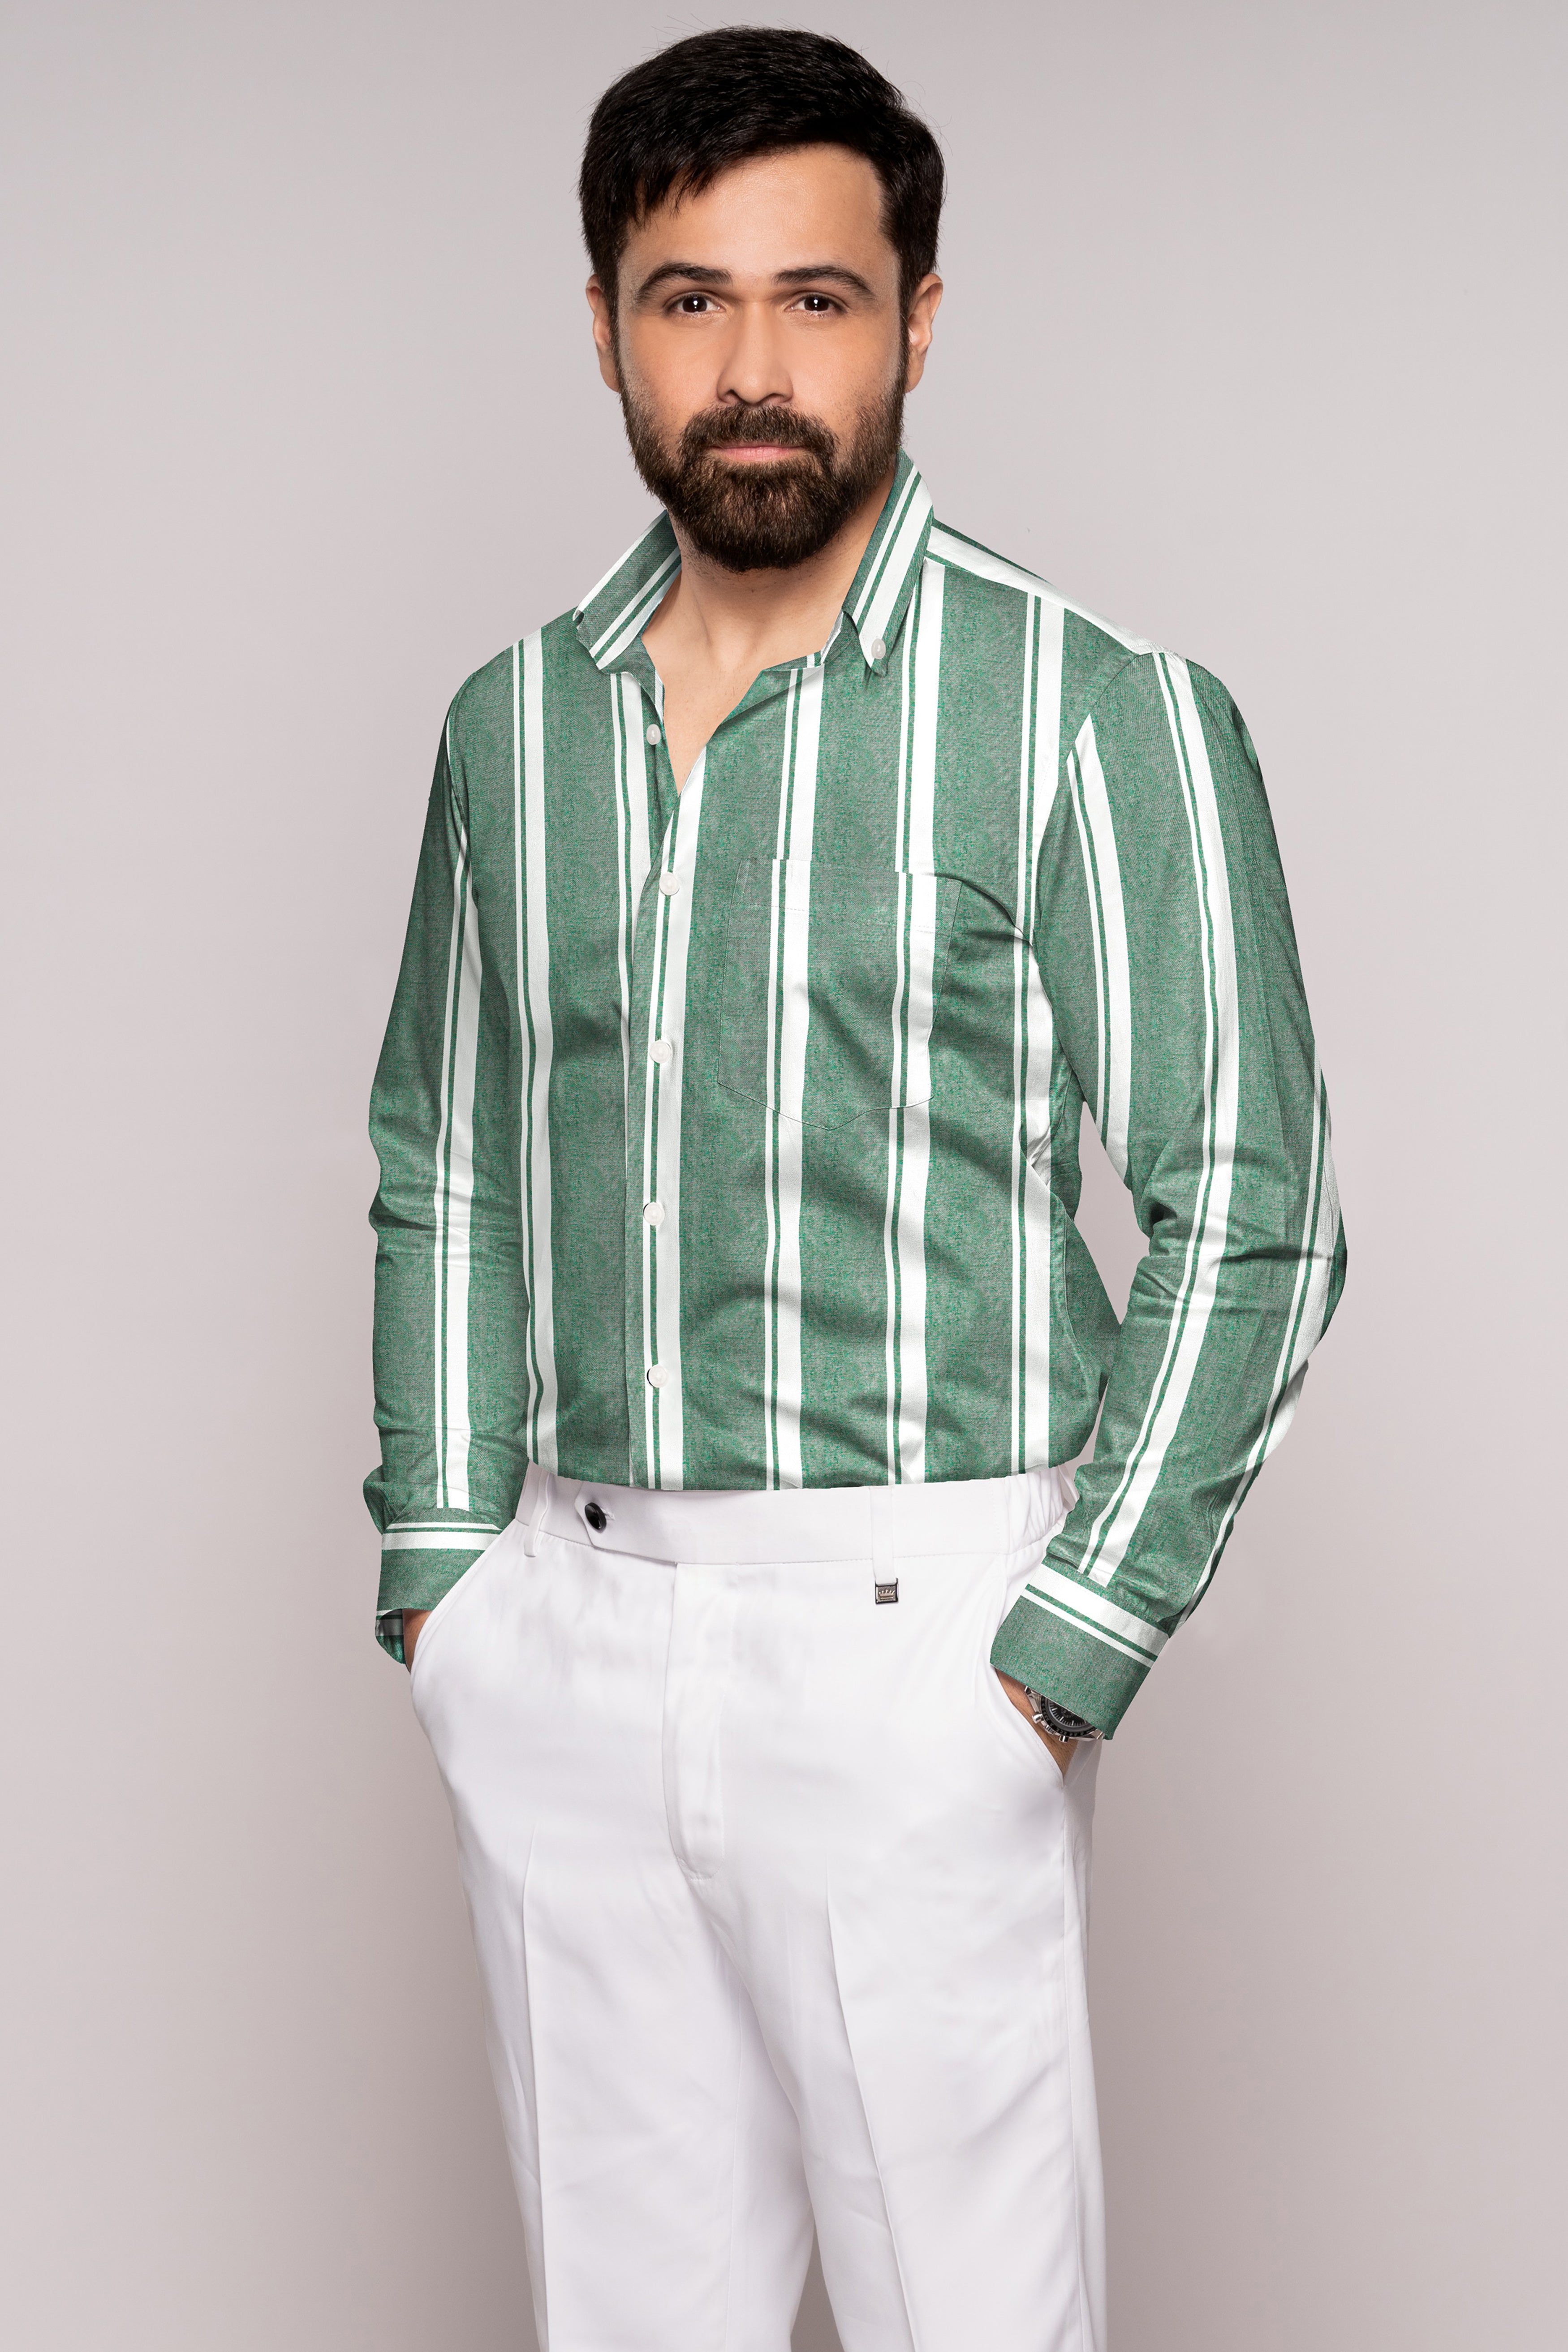 Cactus Green and Bright White Twill Striped Premium Cotton Shirt